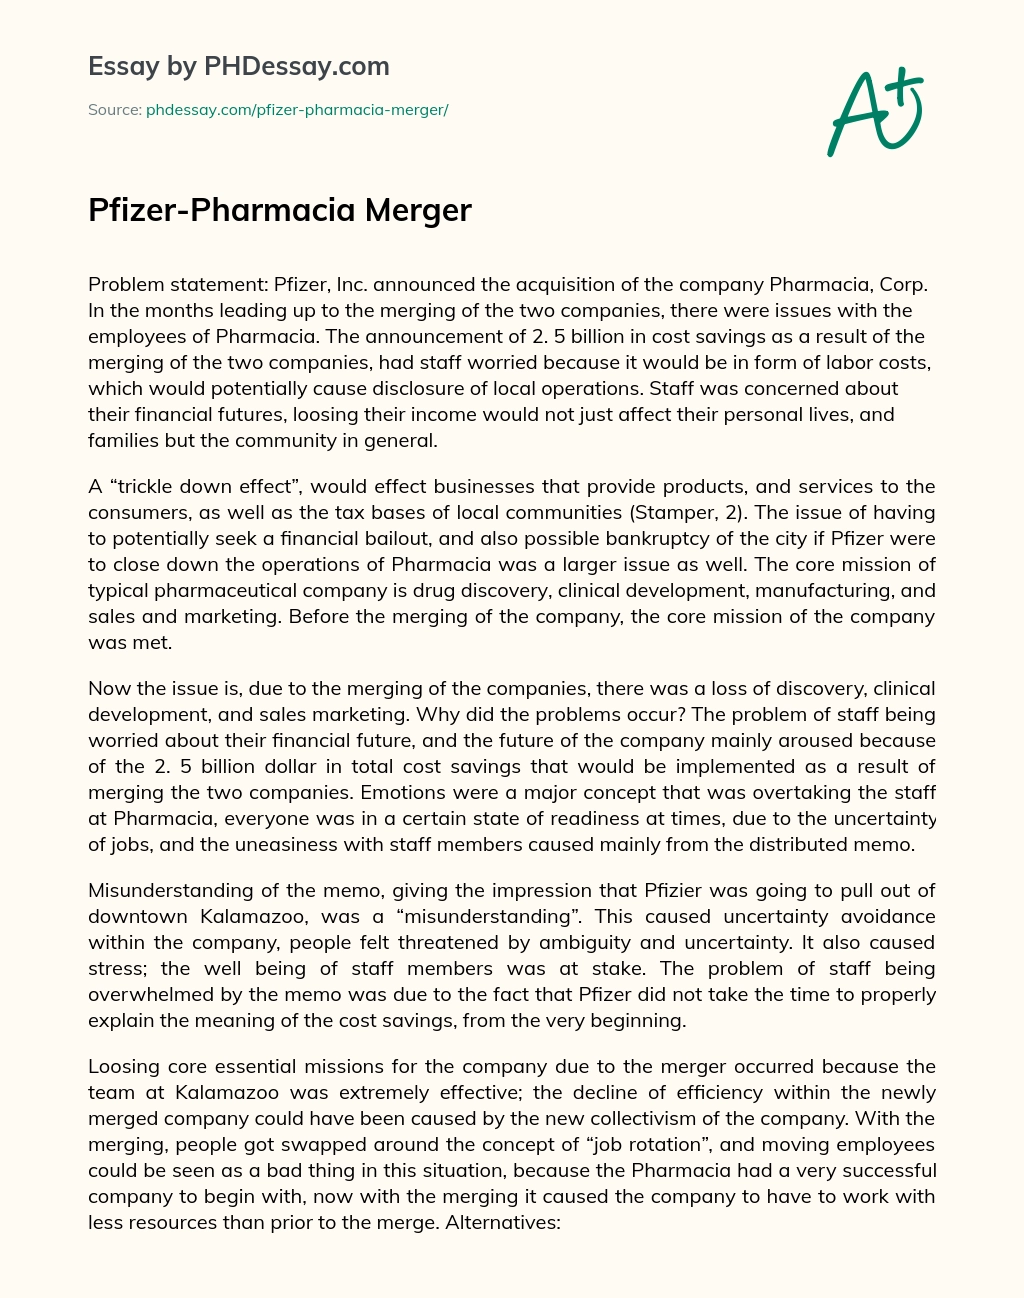 Pfizer-Pharmacia Merger essay